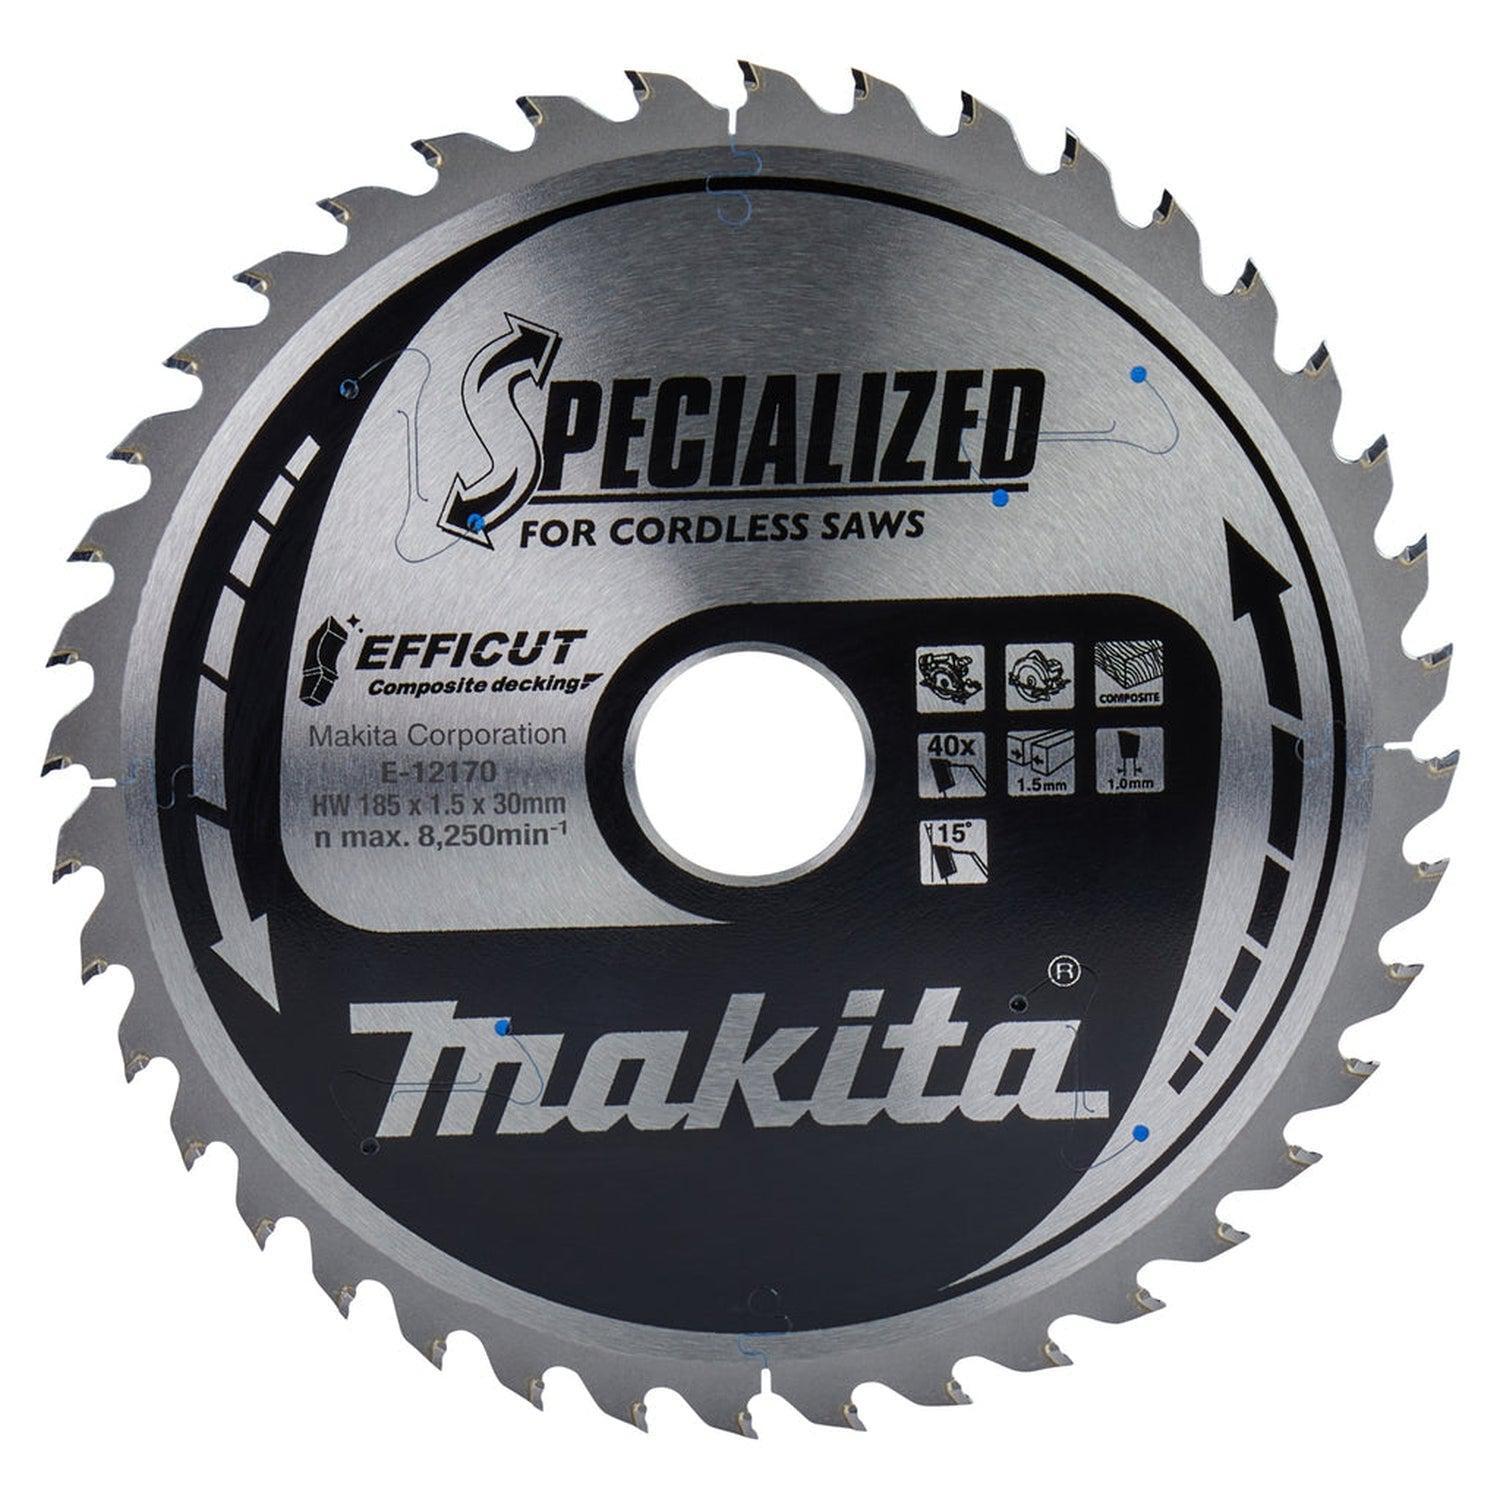 Makita E-12170 Cirkelzaagblad voor WPC | Efficut | Ø 185mm Asgat 30mm 40T